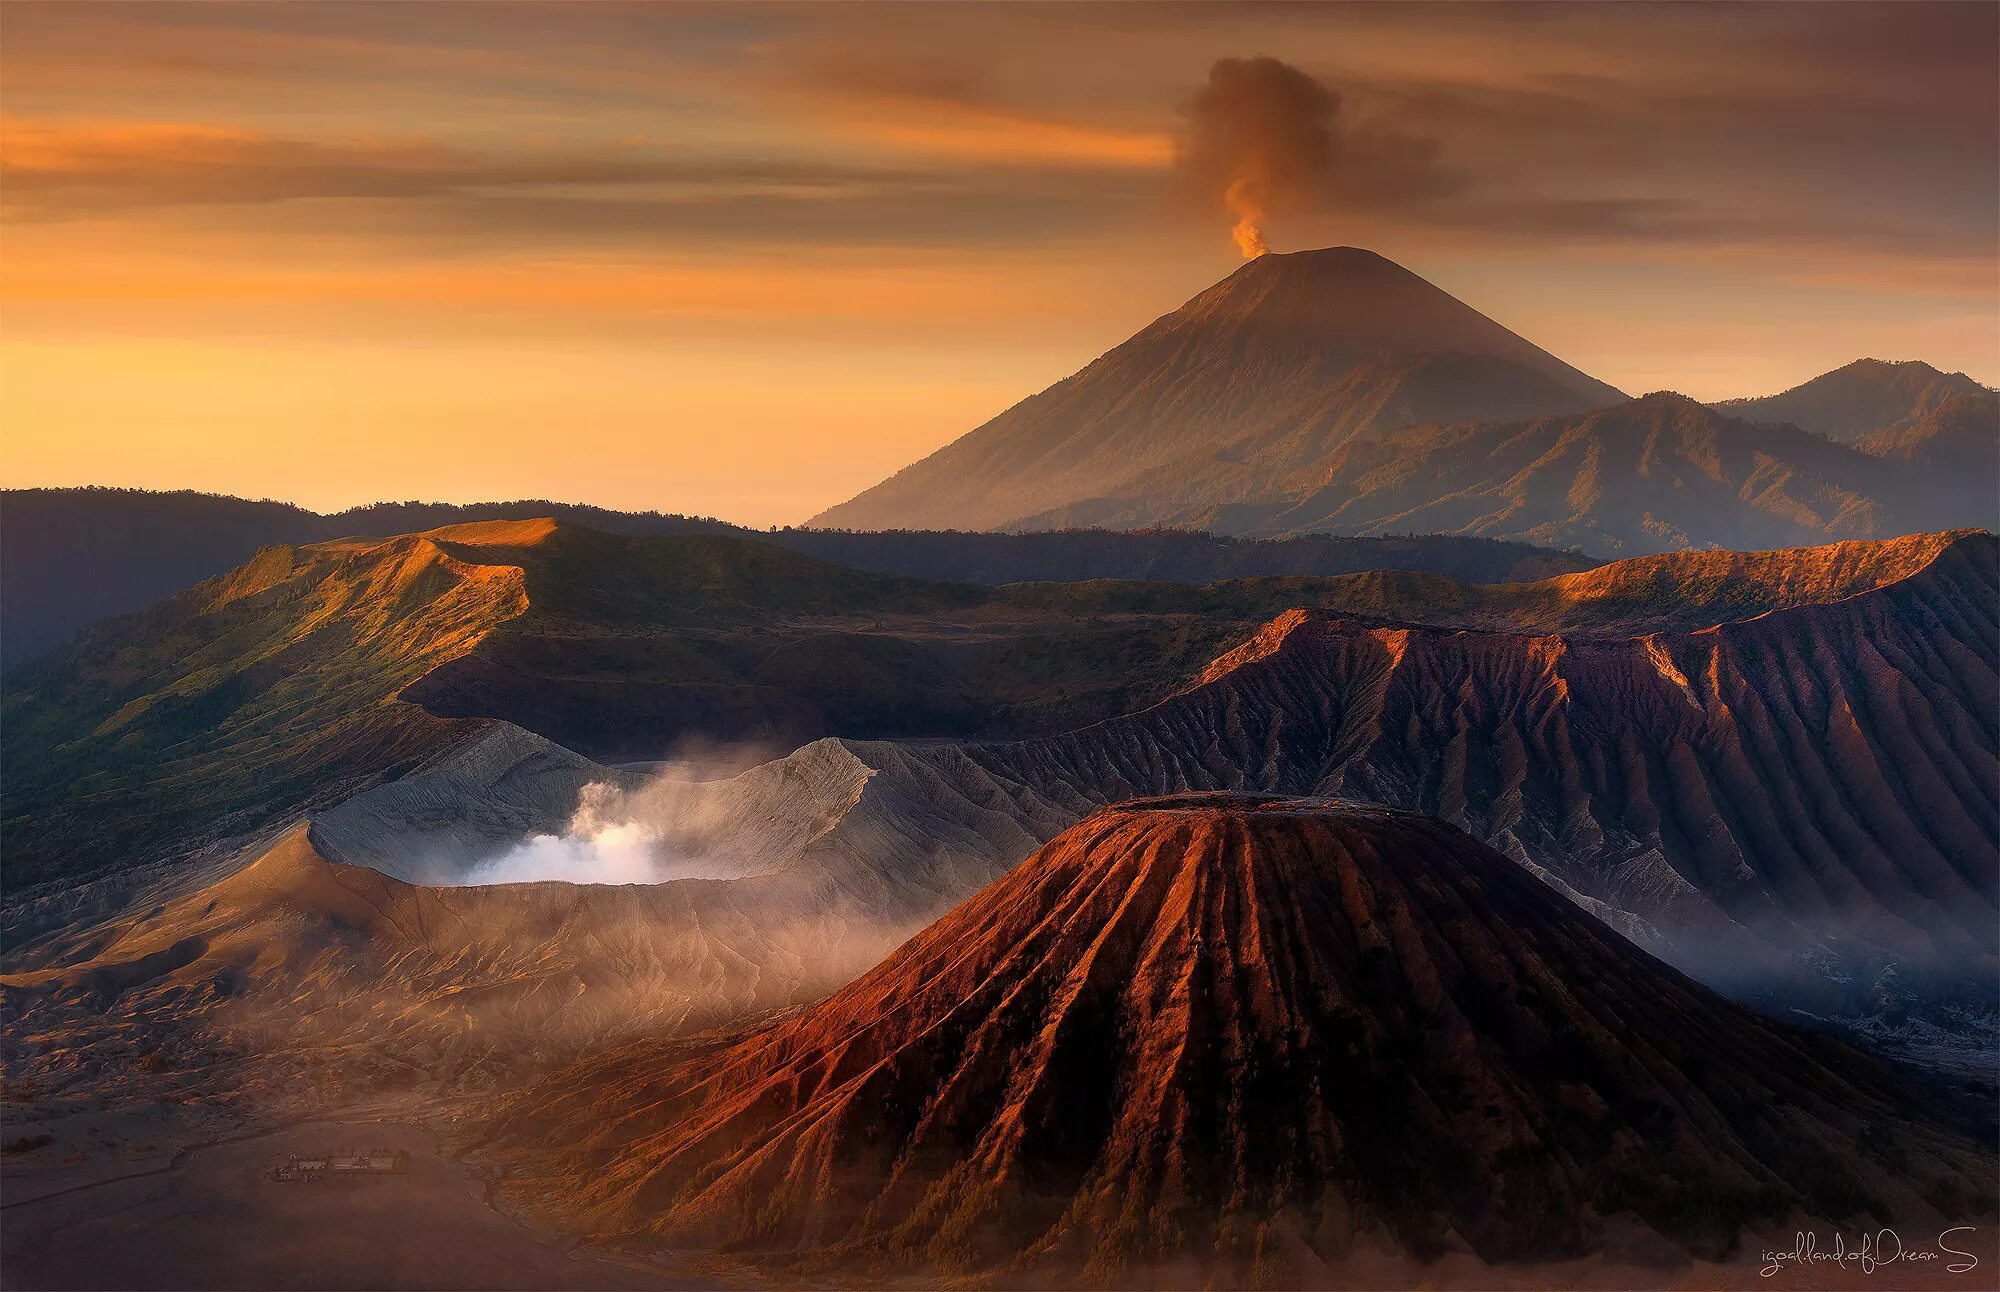 Вулкан брома. Гора Бромо Индонезия. Национальный парк «Бромо-Тенгер-семеру» - Индонезия. Вулкан Бромо, Индонезия, острова Ява. Гора Бромо вулкан в Индонезии.